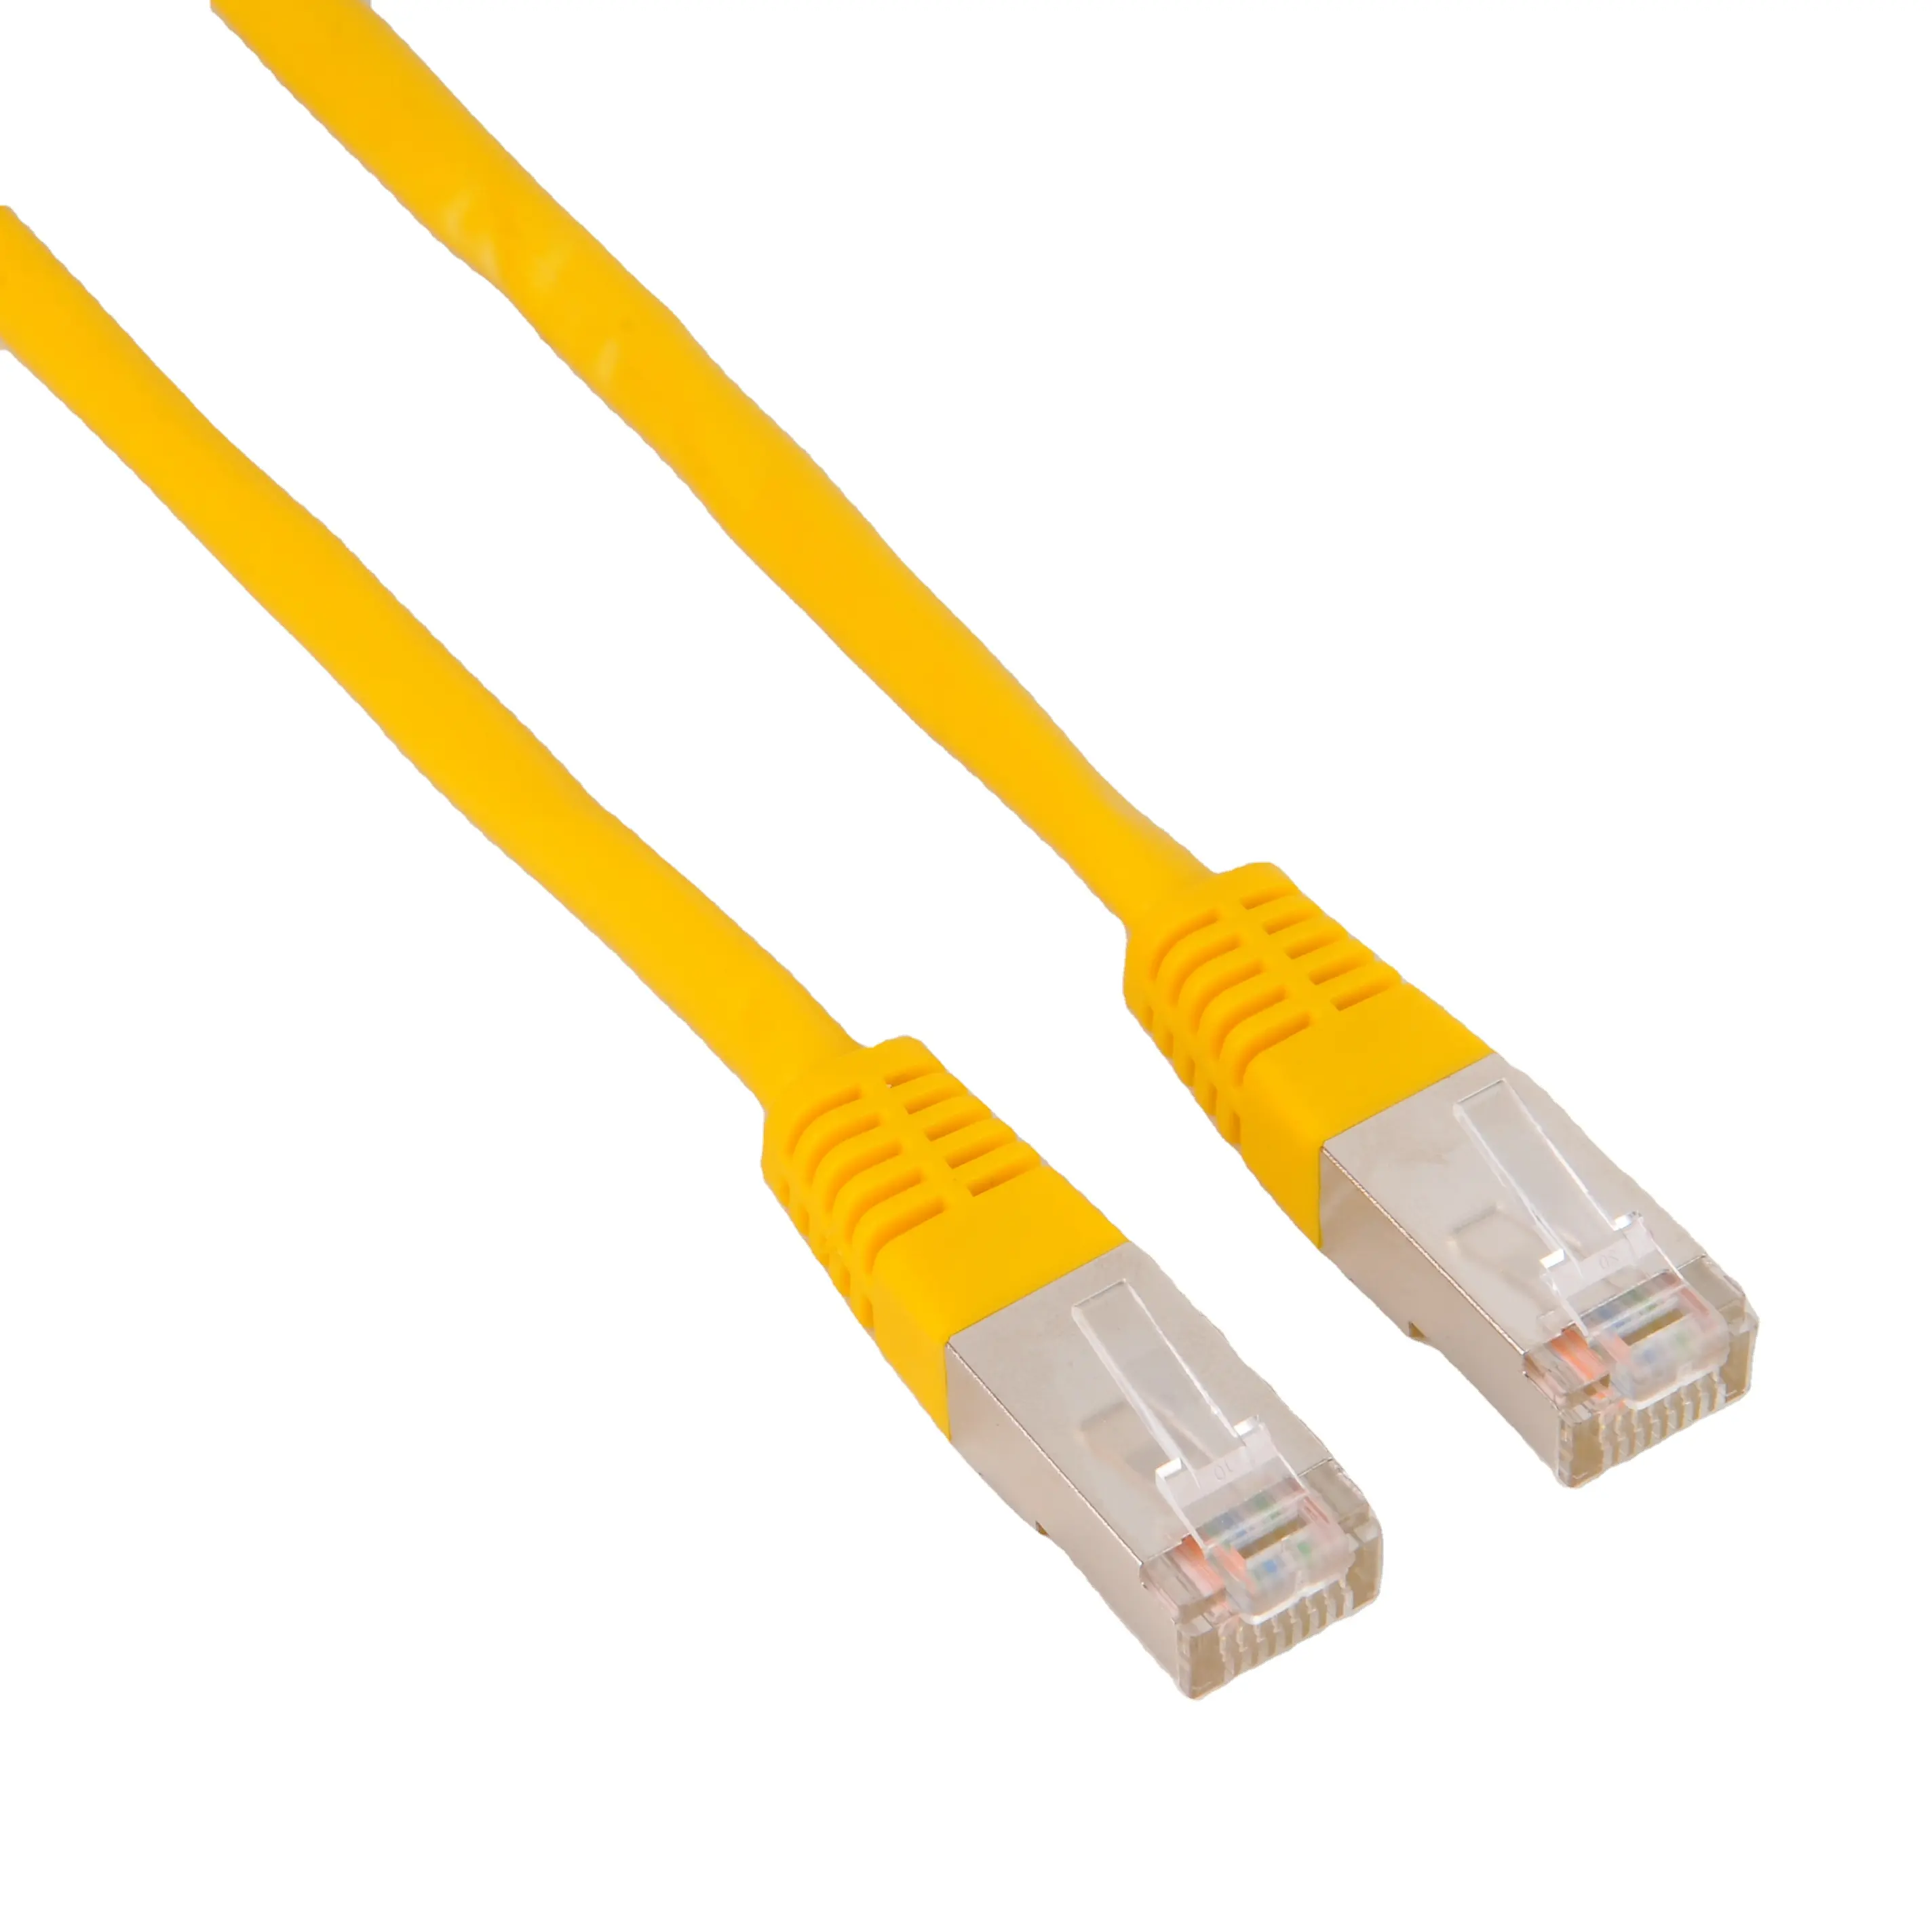 Cable de conexión de red UTP Cat5e Cat6, Cable de conexión de 24AWG para ordenador Ethernet, colores opcionales, calidad Superior, 0,25 M